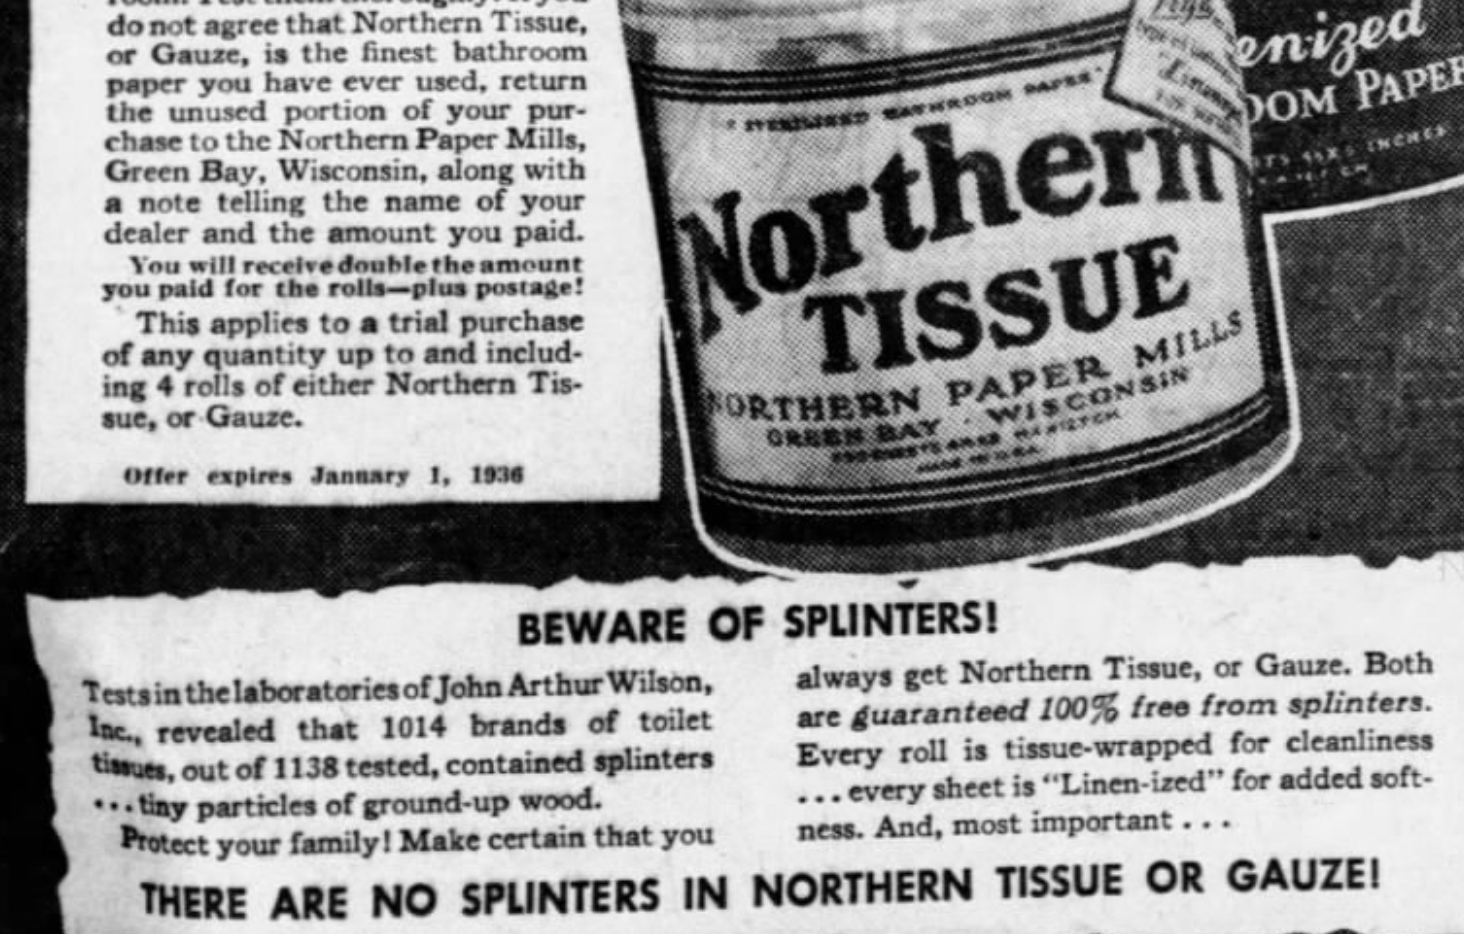 An newspaper advertisement for splinter-free Northern Tissue